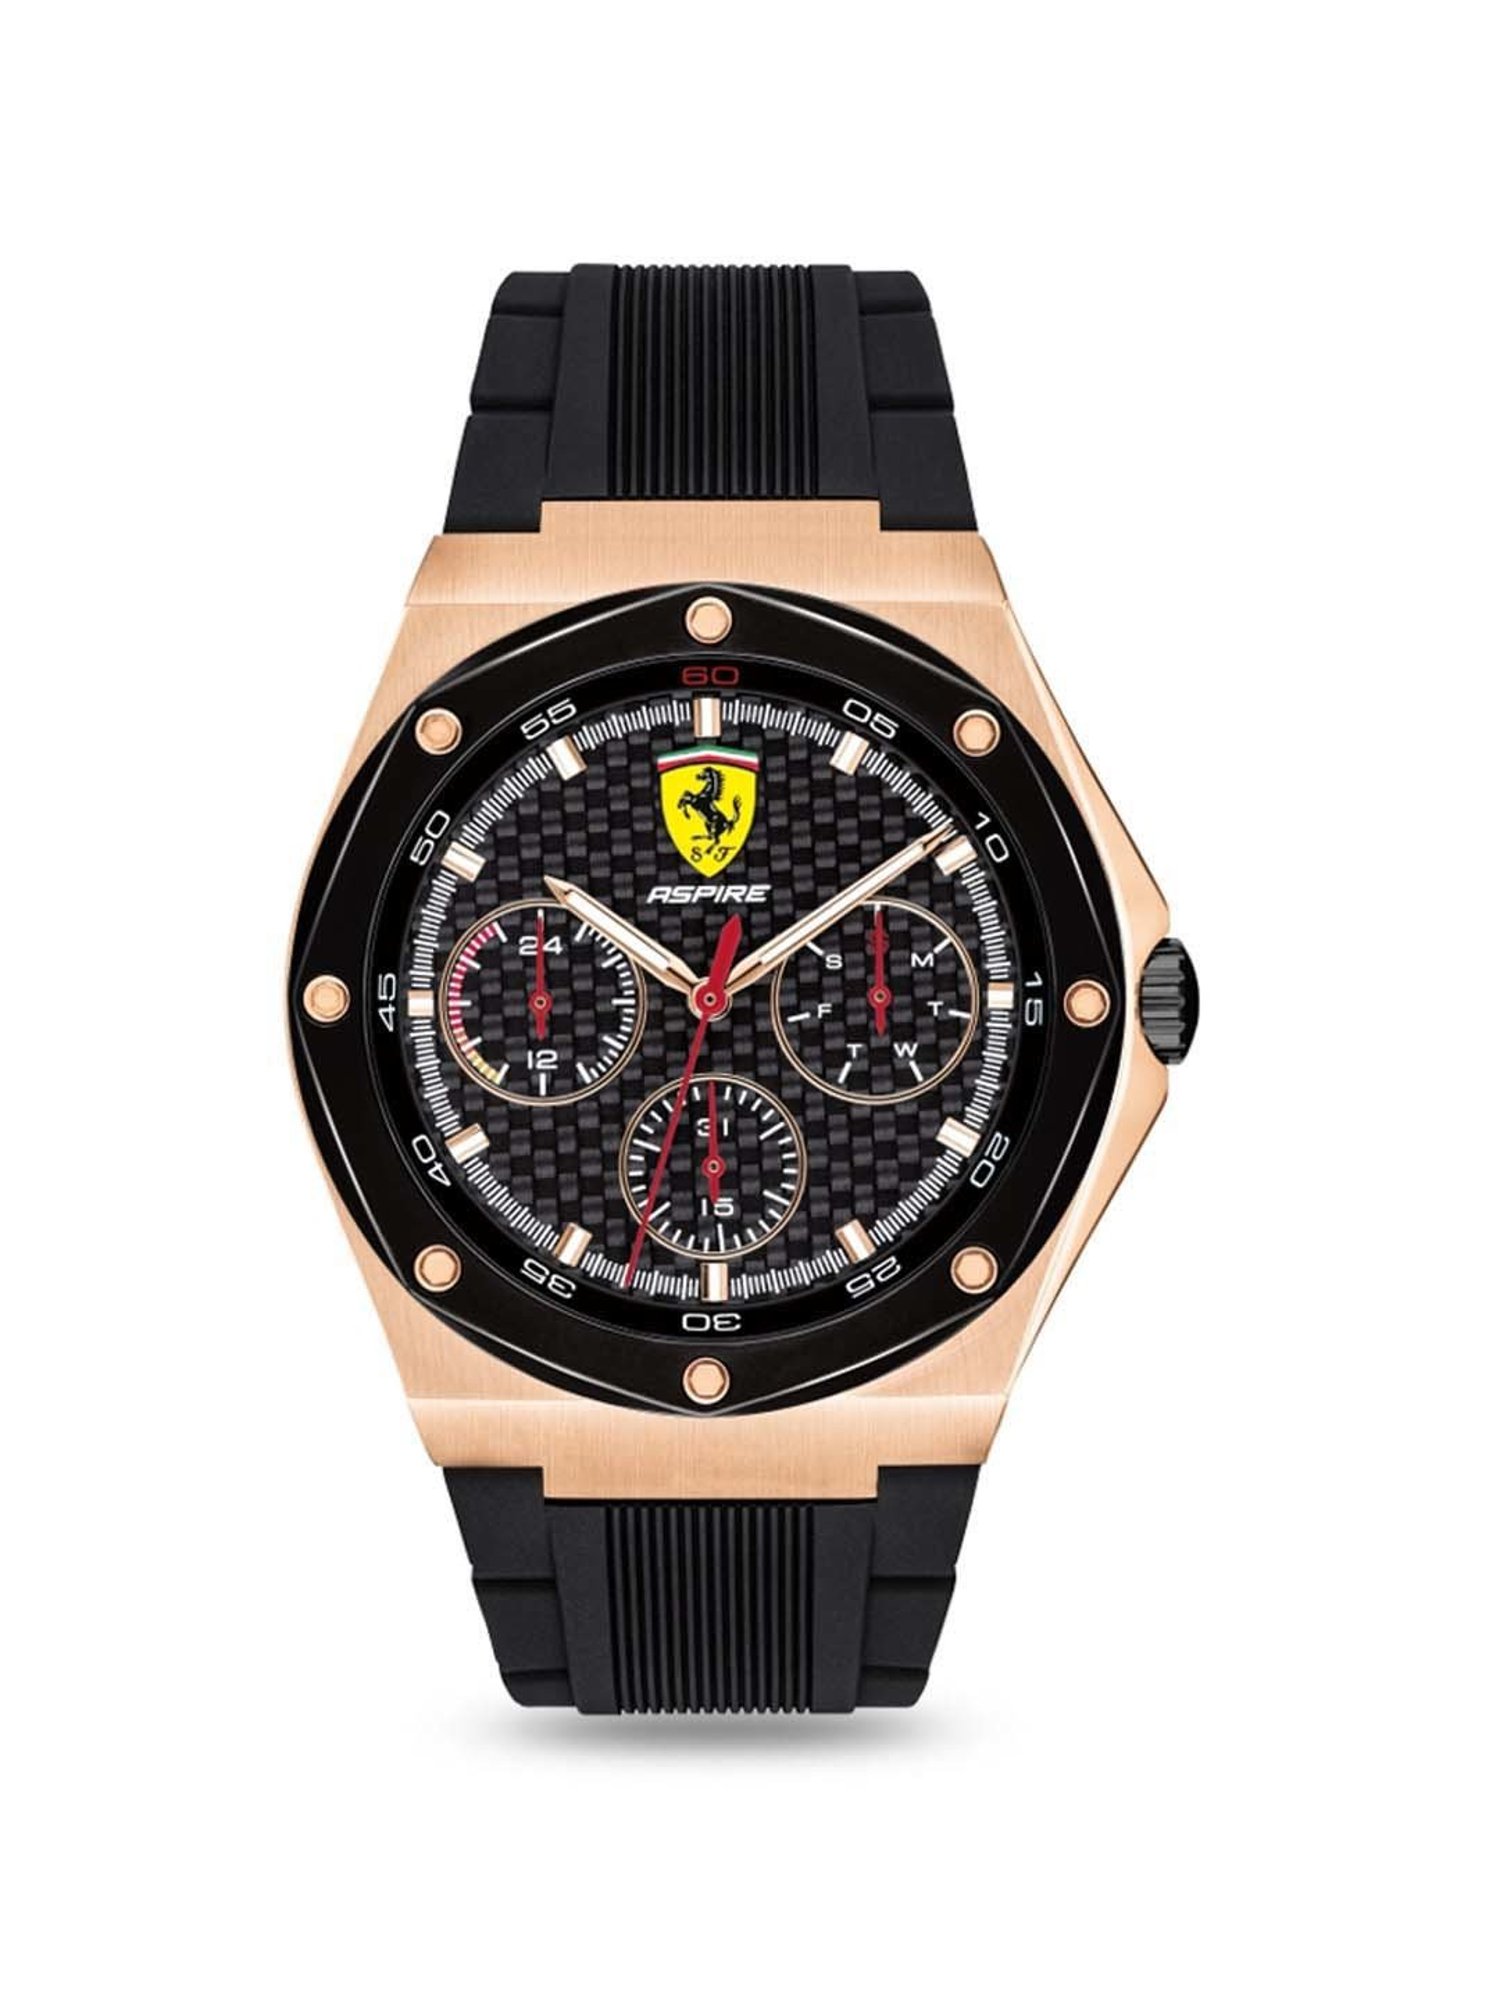 Ferrari Watch, Aspire Multifunction Mens, Gold, 2019